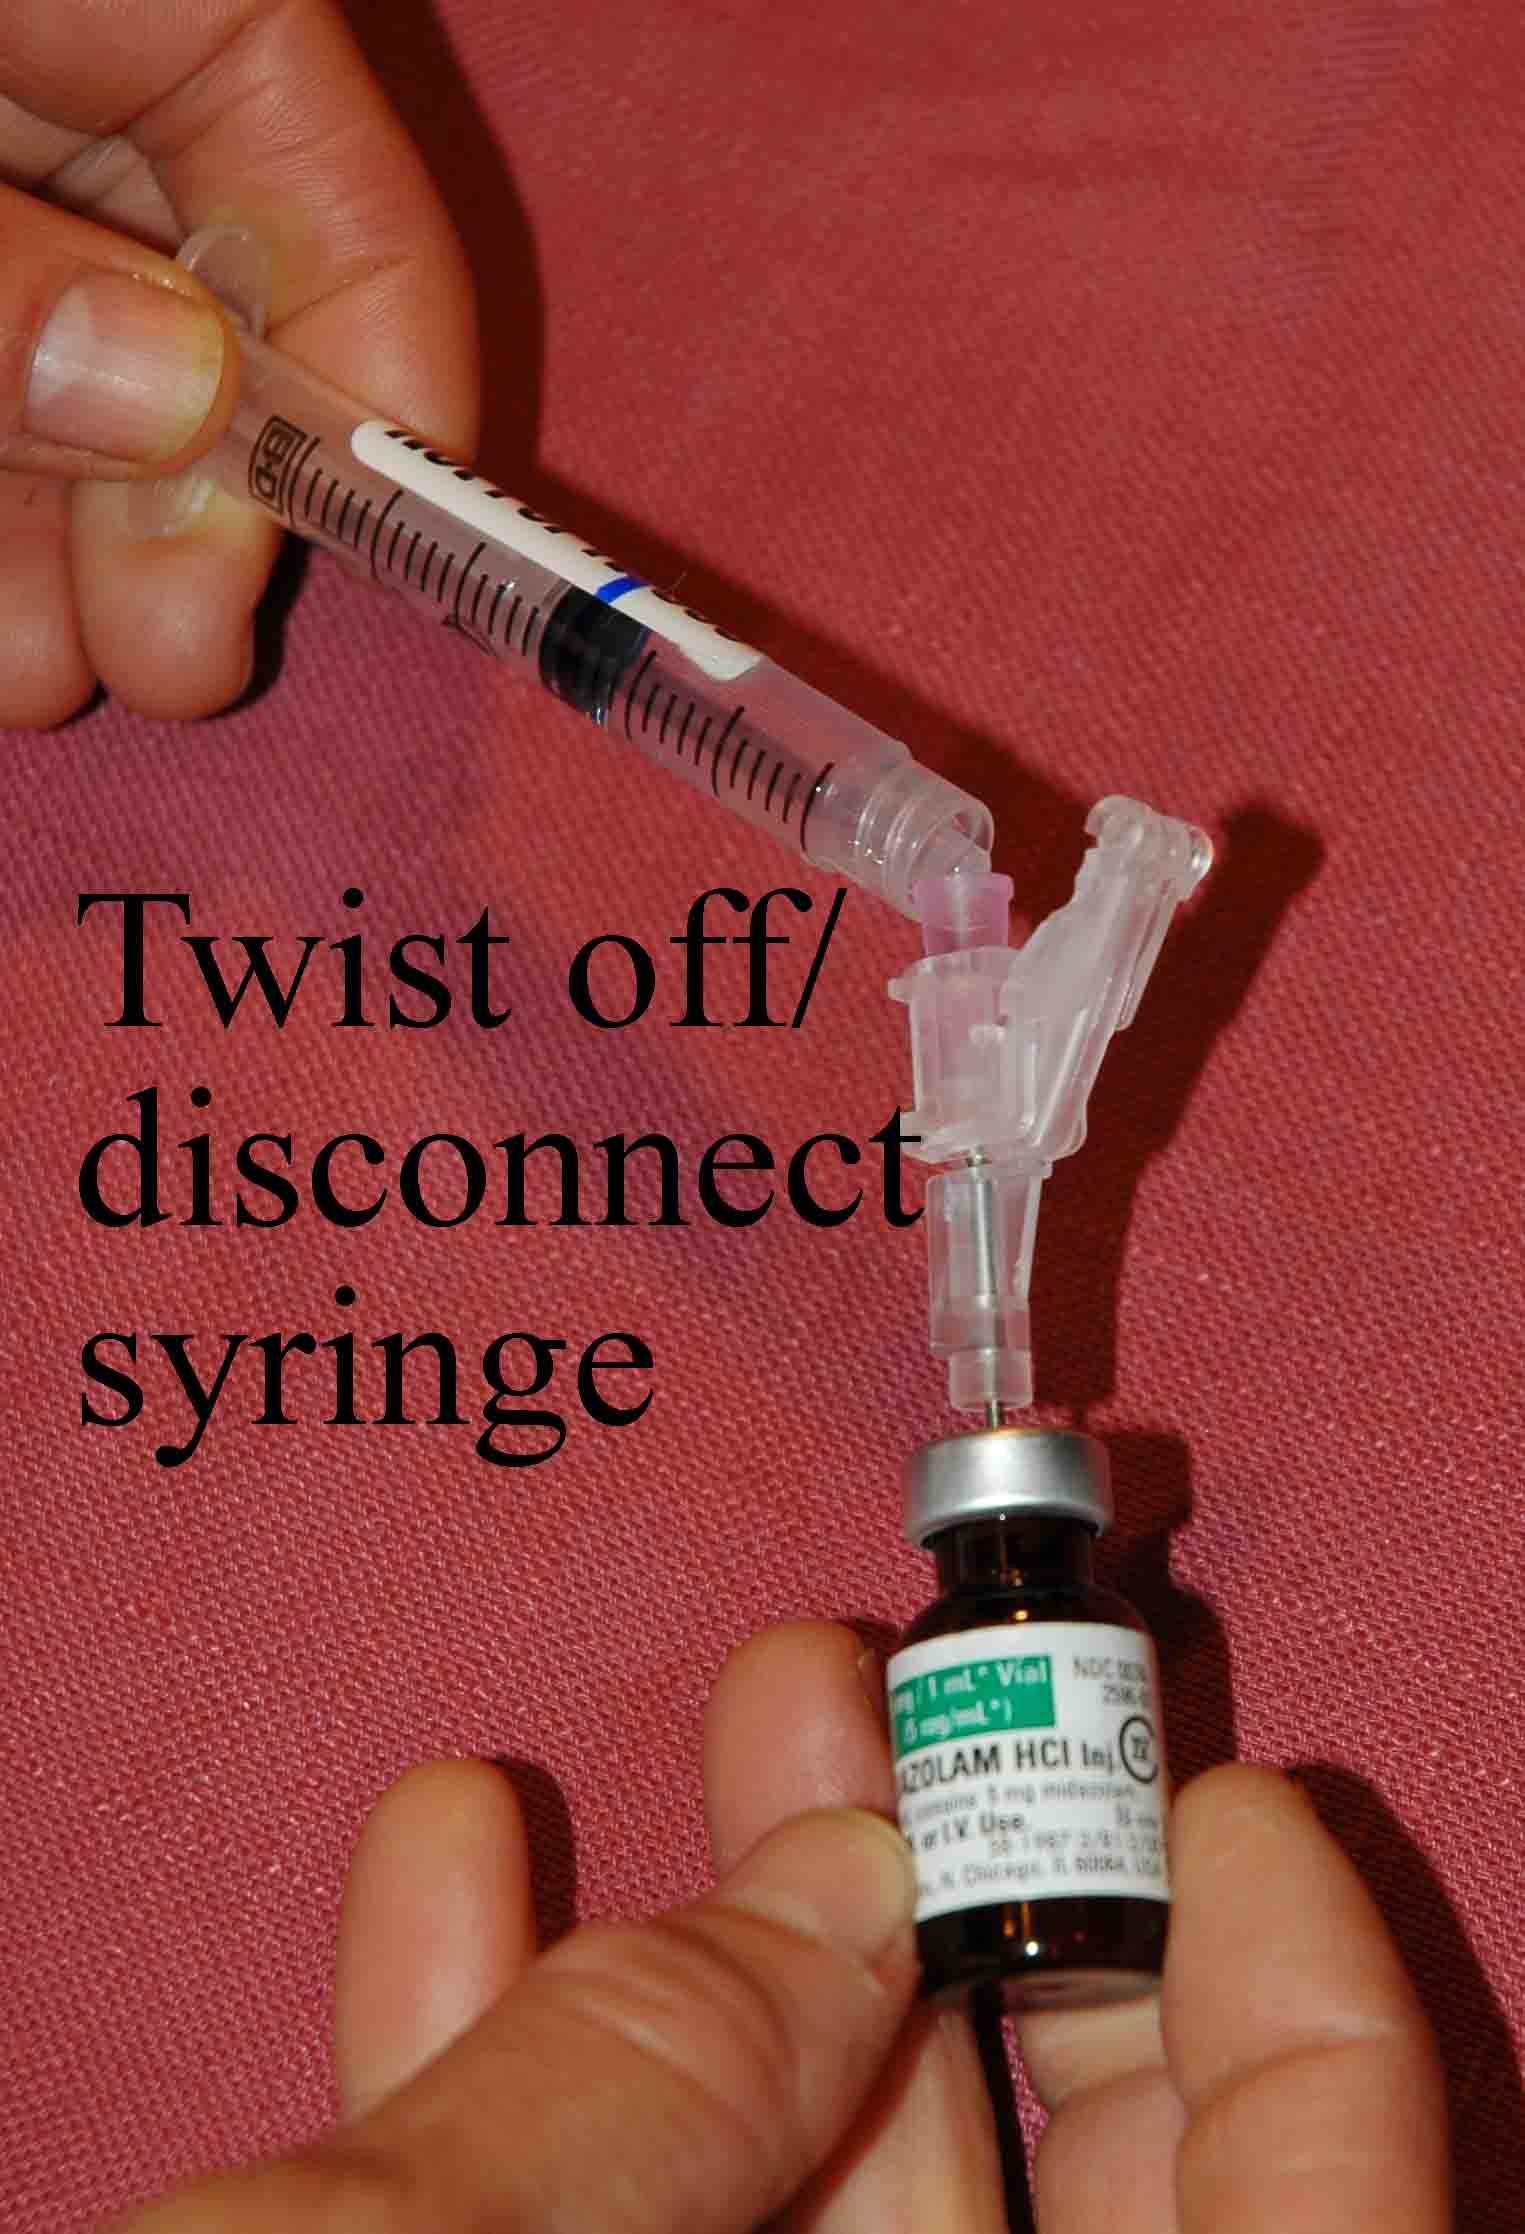 Disconnect syringe from needle